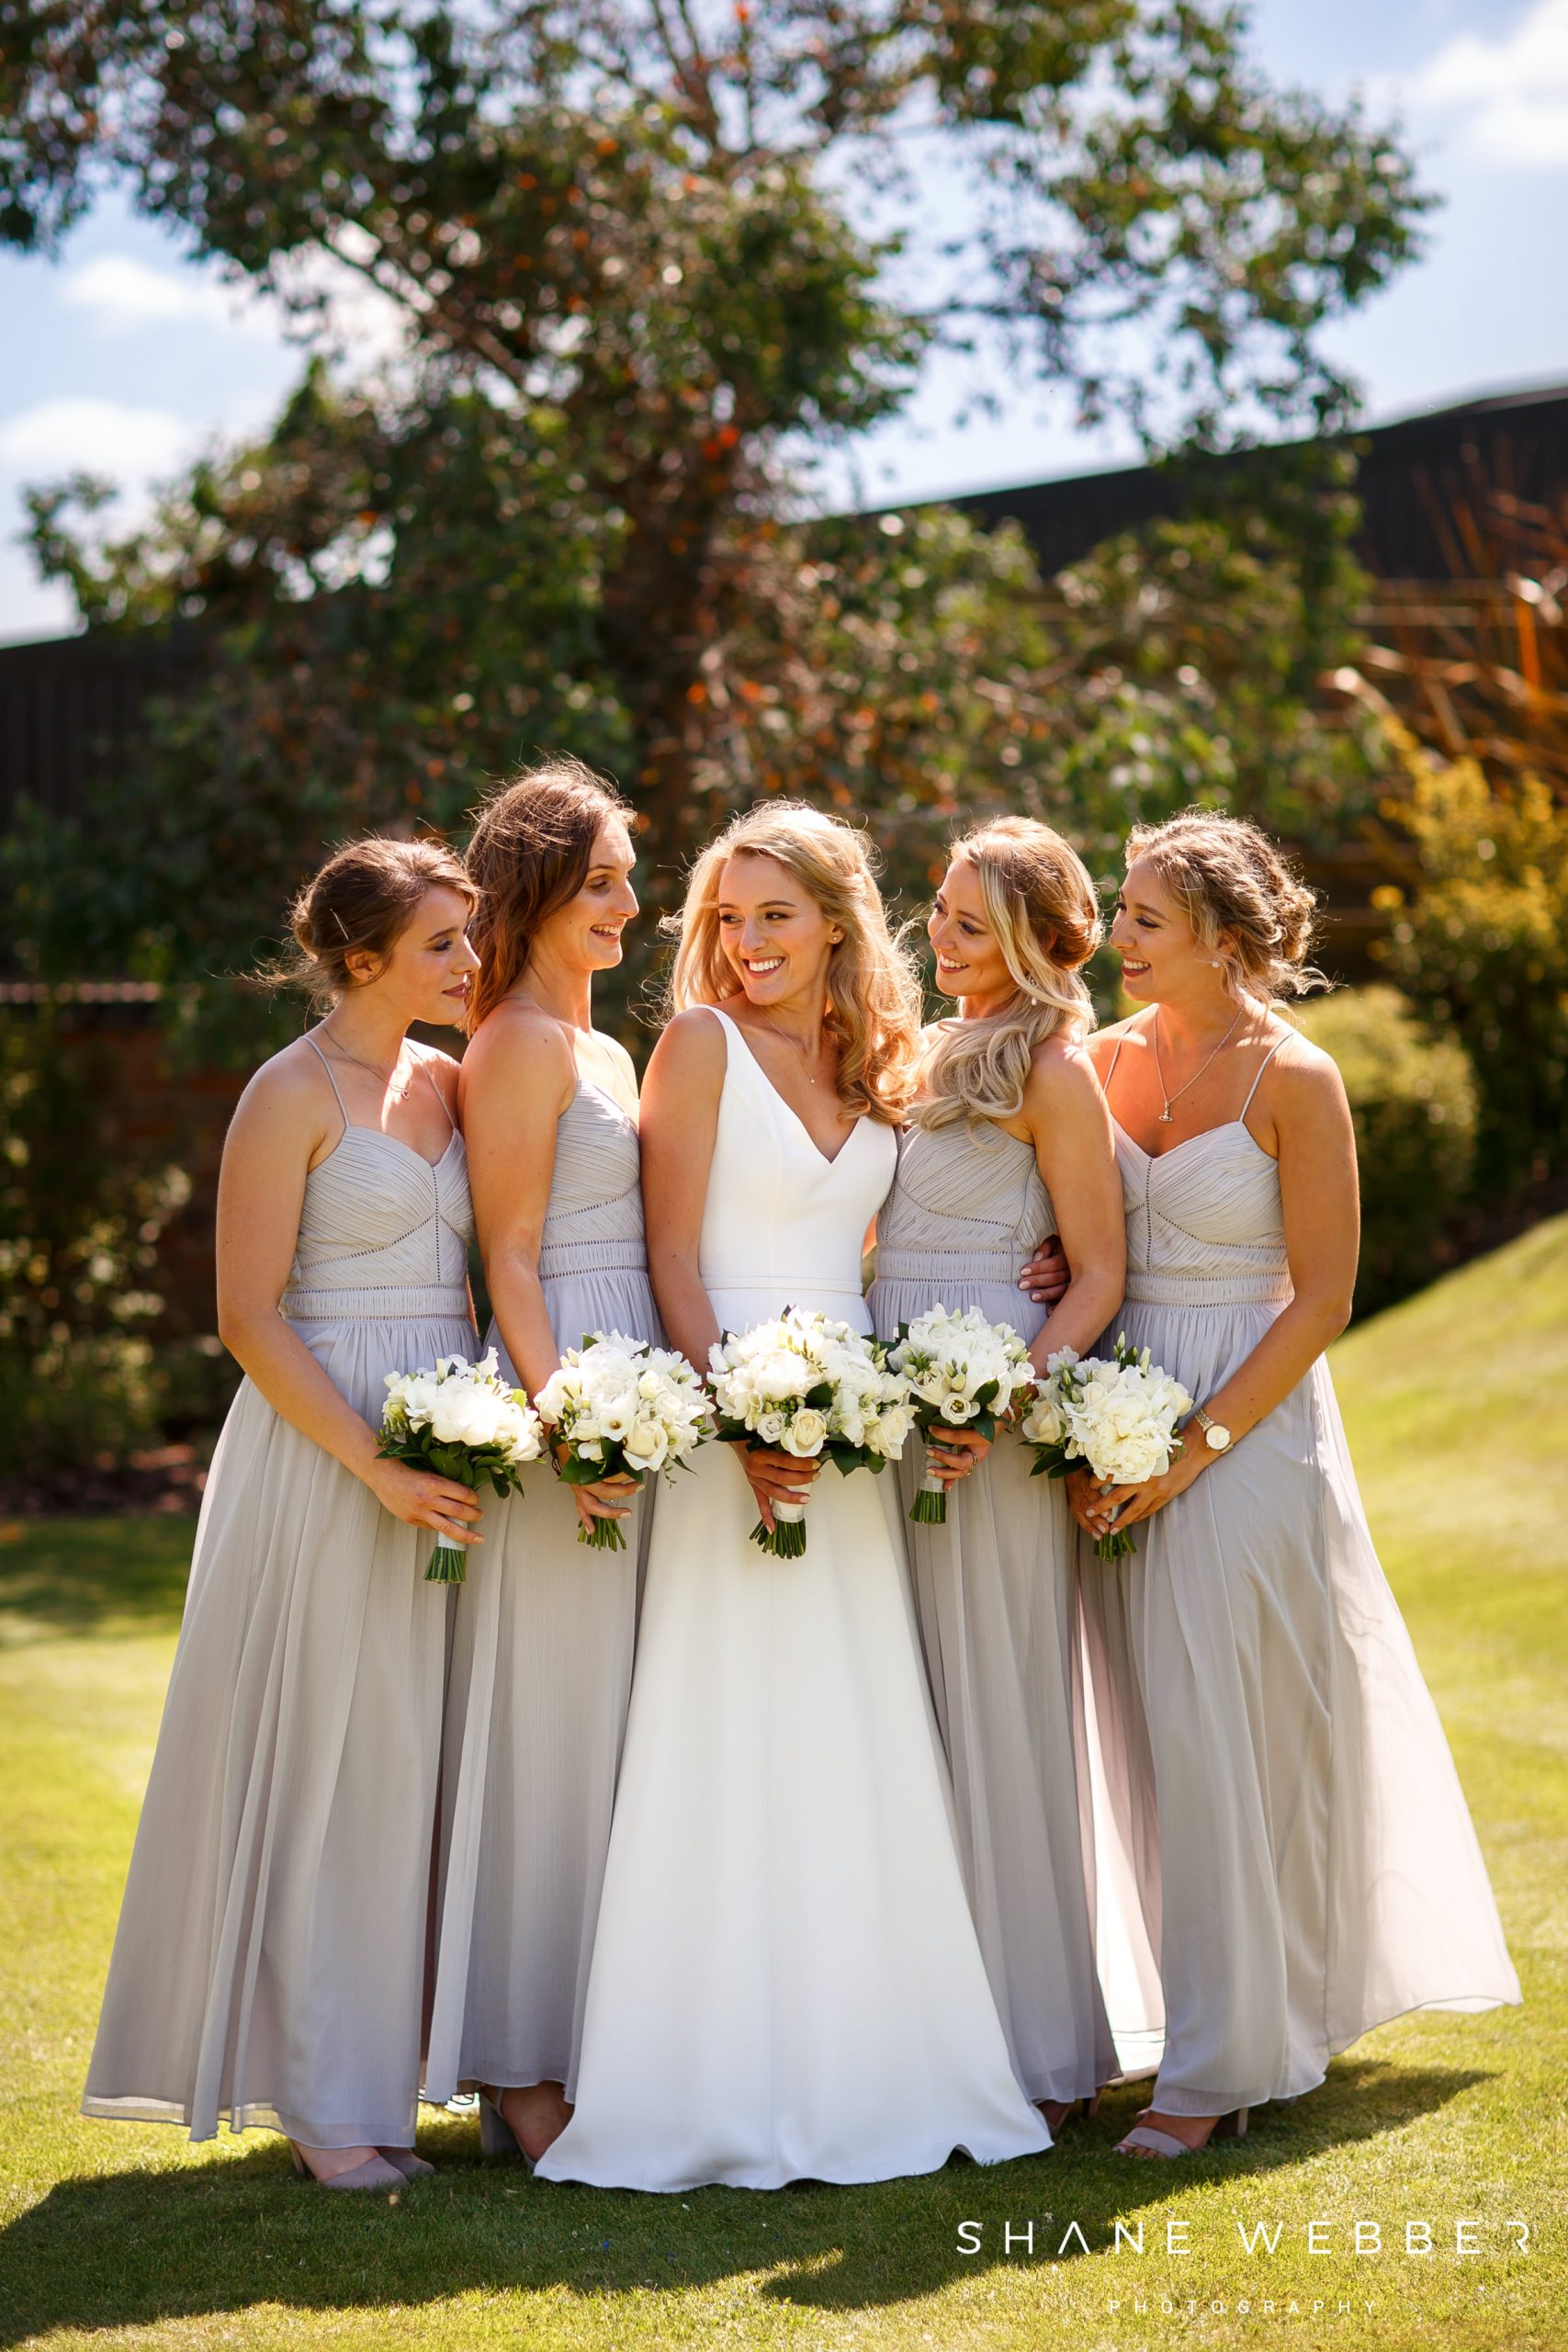 12 bridesmaid dresses you'll love | wedding inspiration